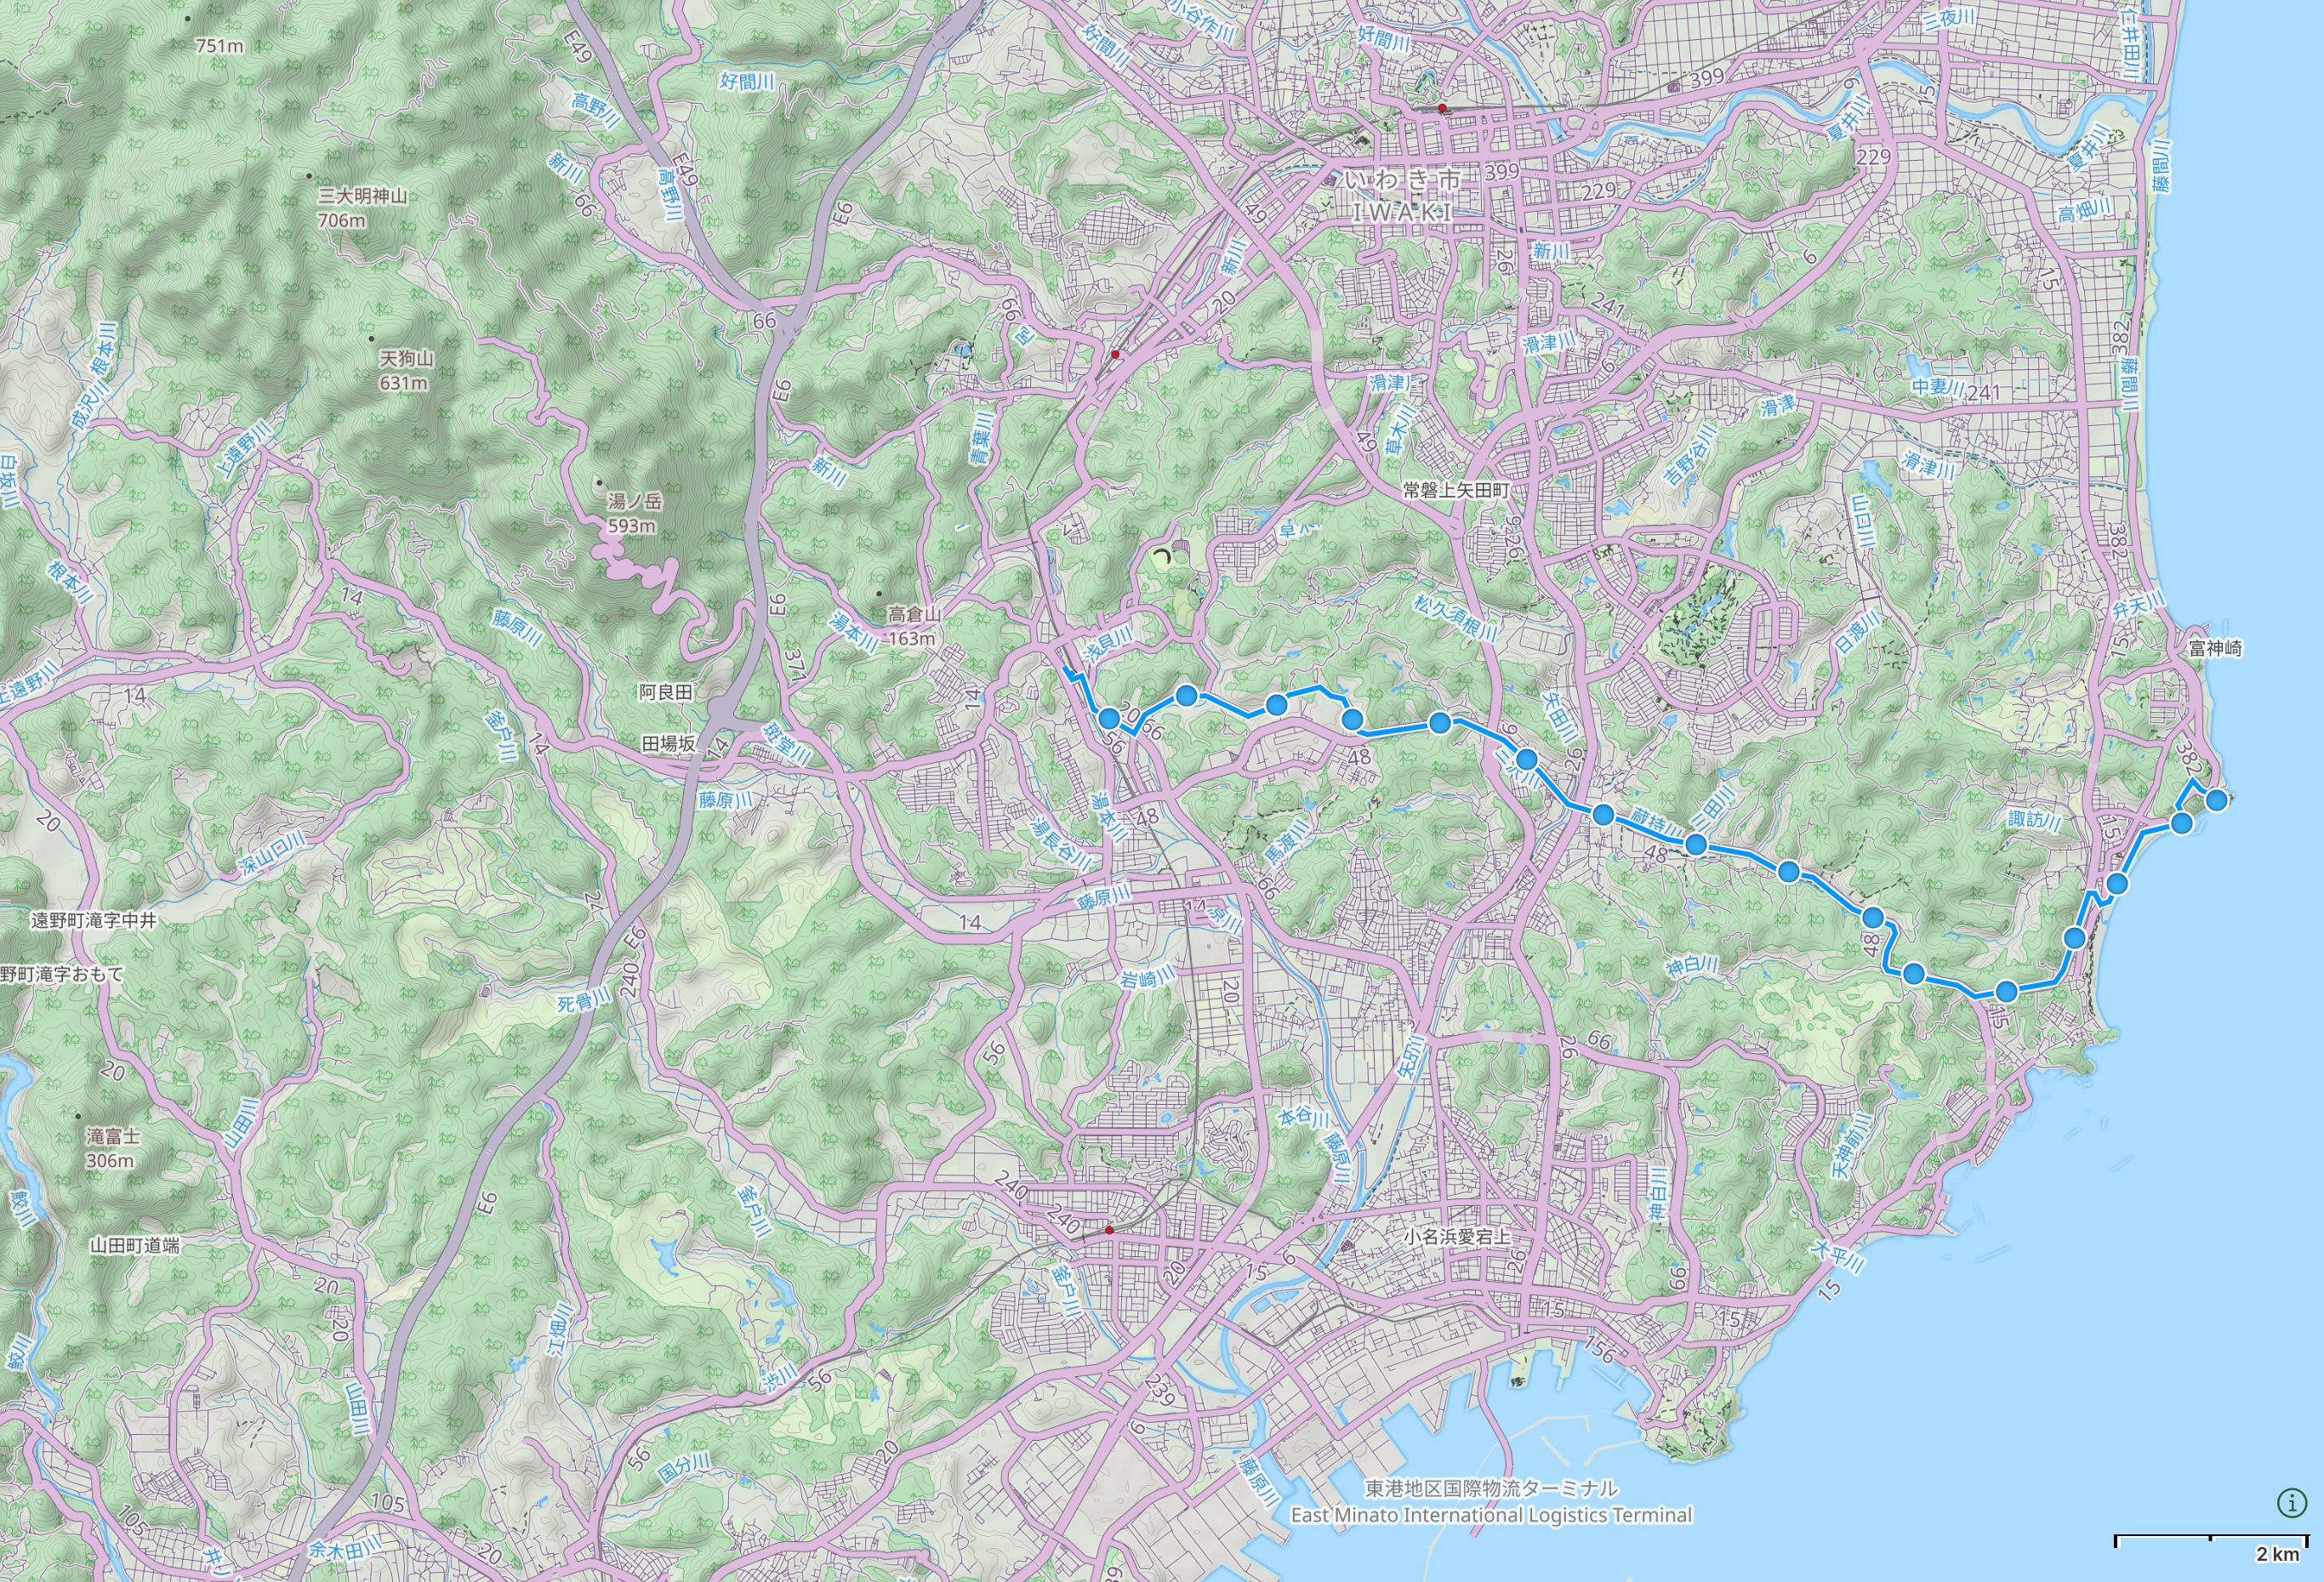 Map of Fukushima with author’s route from Iwaki to Shioyazaki Lighthouse highlighted.